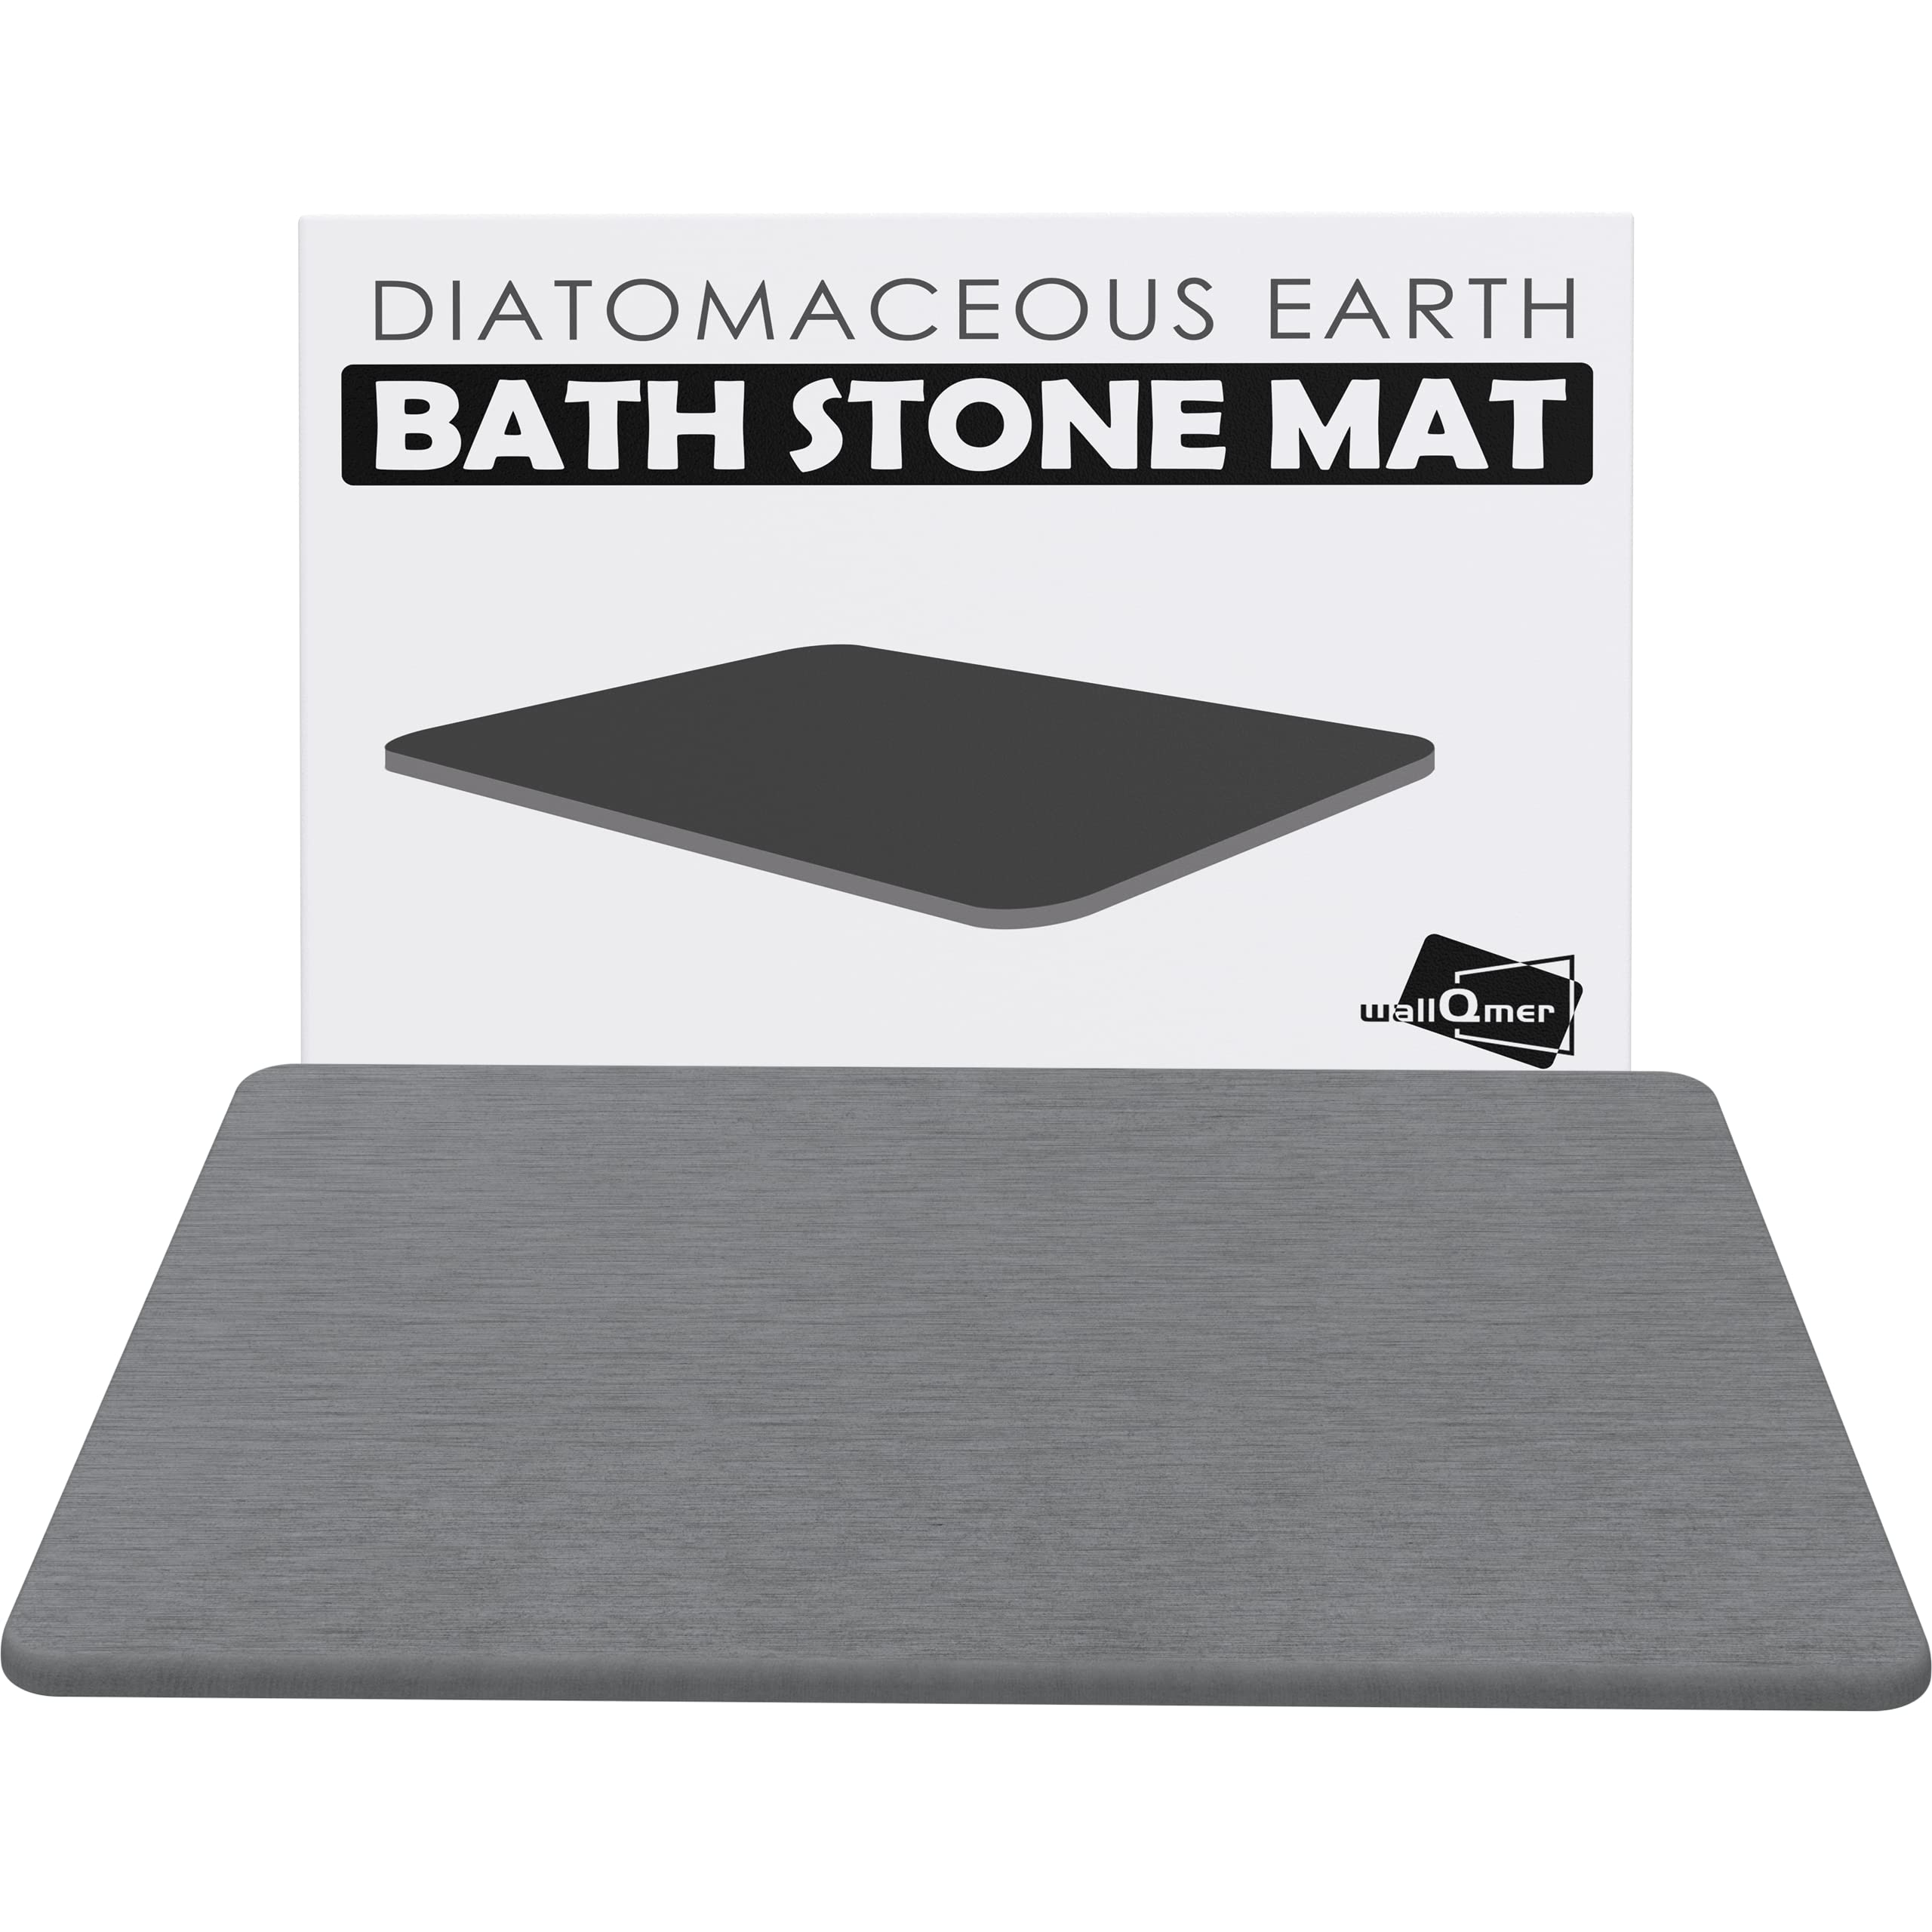 Bath Mat, Stone Bath Mat, Bath Stone Mat, Diatomaceous Earth Bath Stone  Mat, Safe Nonslip Fast Drying Stone Bath Mat for Bathroom/Kitchen